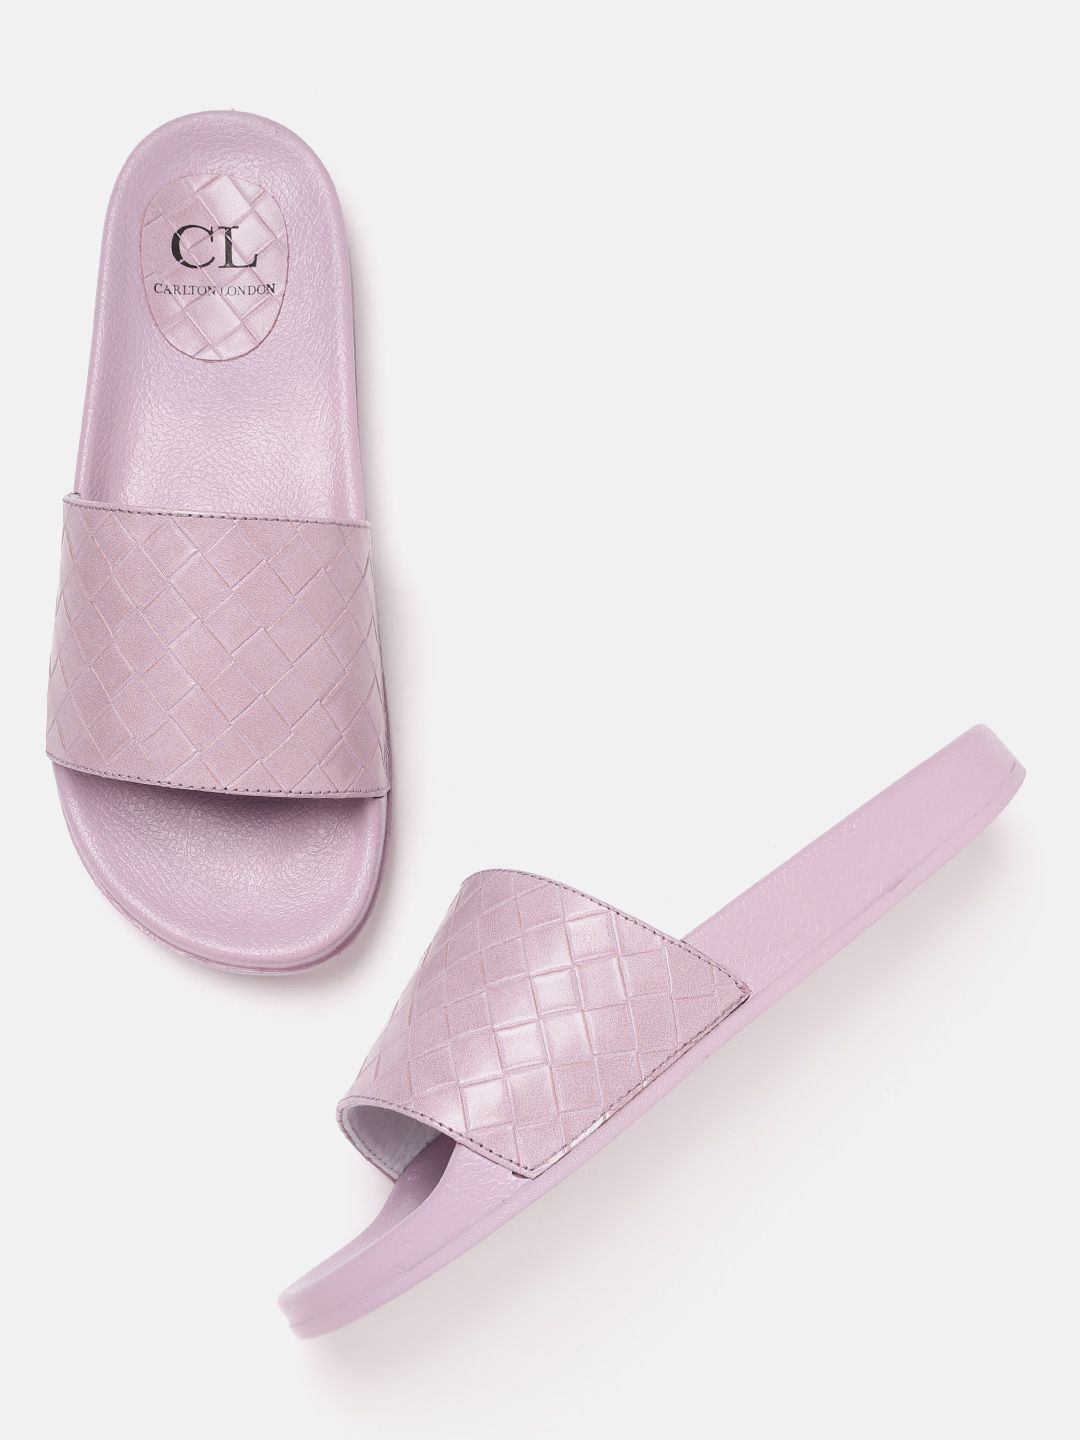 Carlton London Women Lavender Basketweave Textured Open Toe Flats Price in India